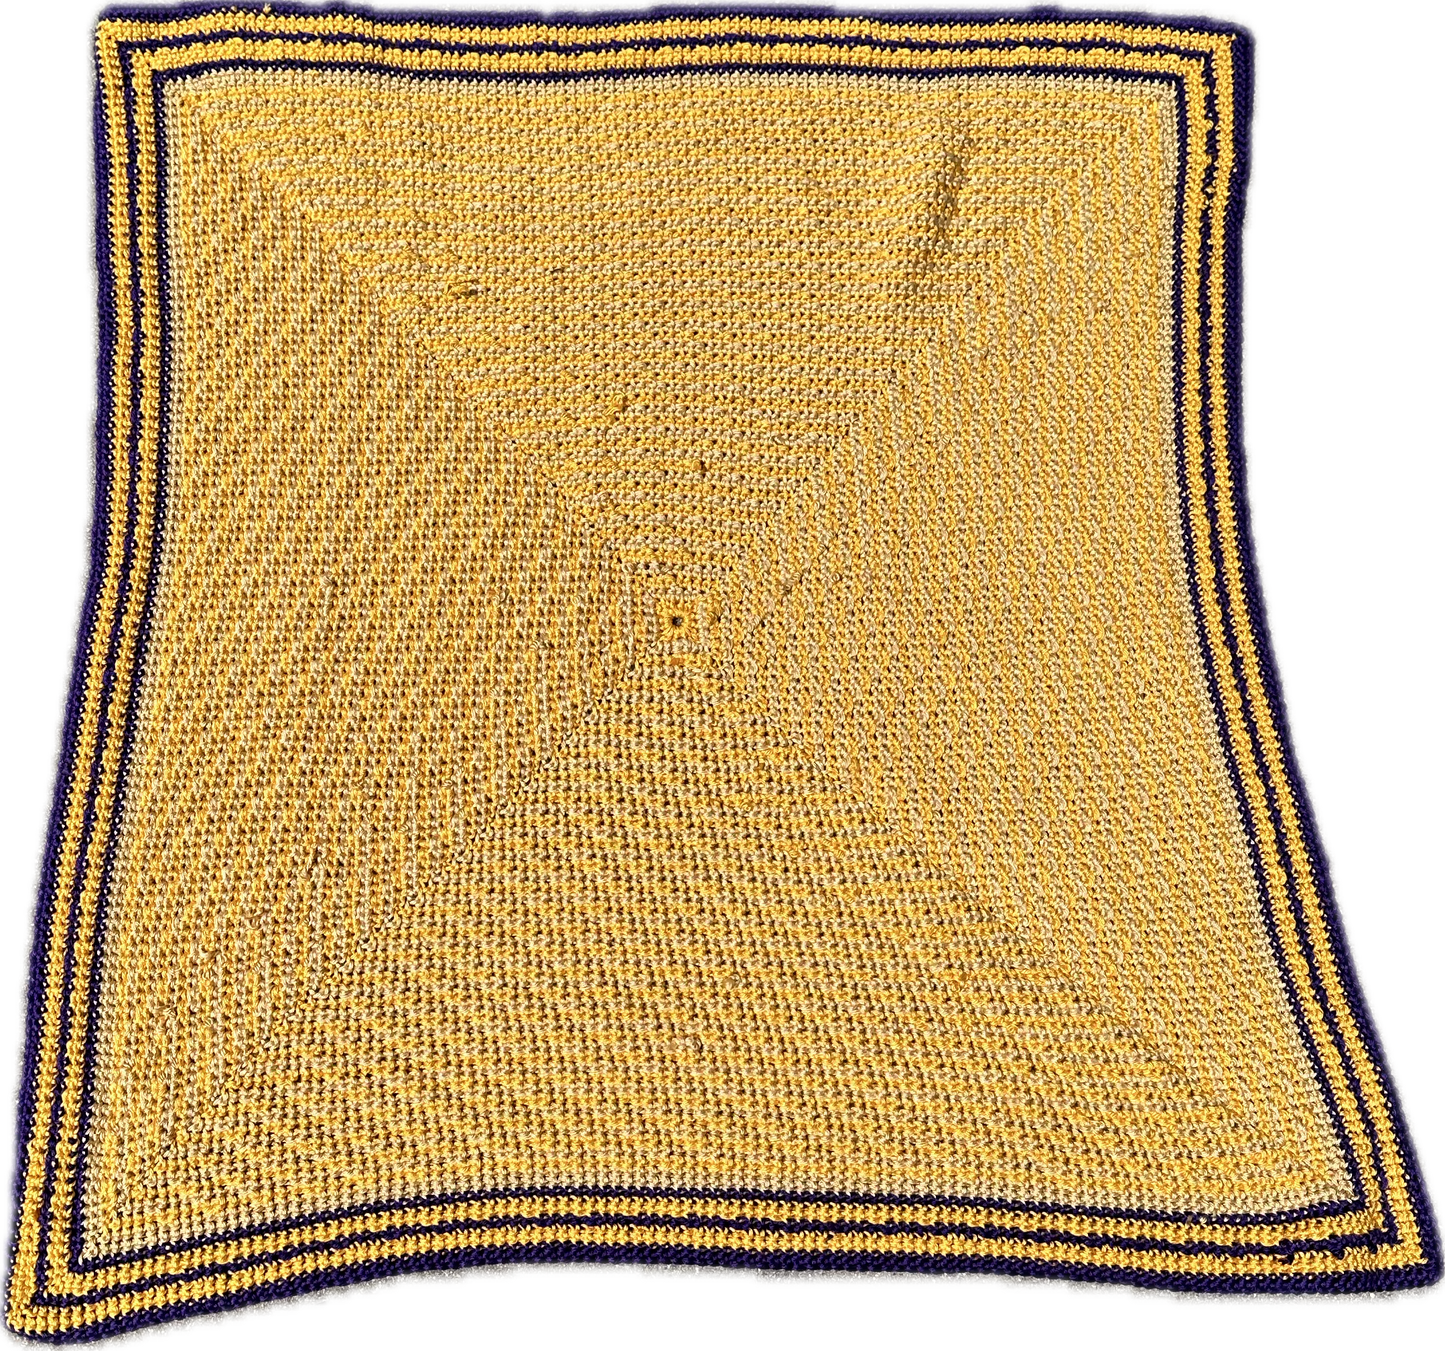 MAD MEN: Megan Draper's 1960s Knit Baby Blanket